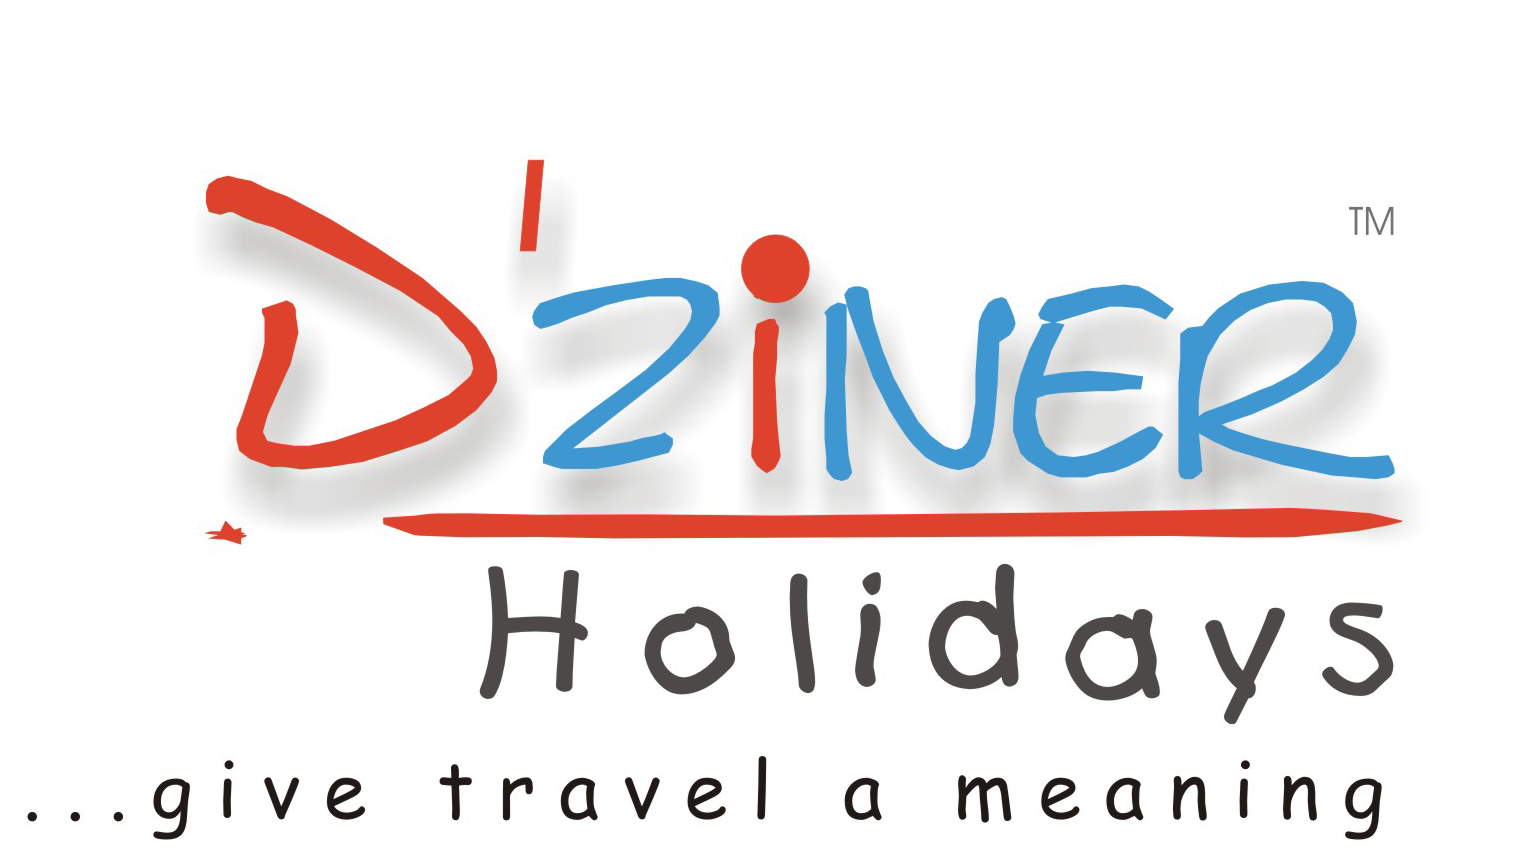 Dziner Travel Concepts